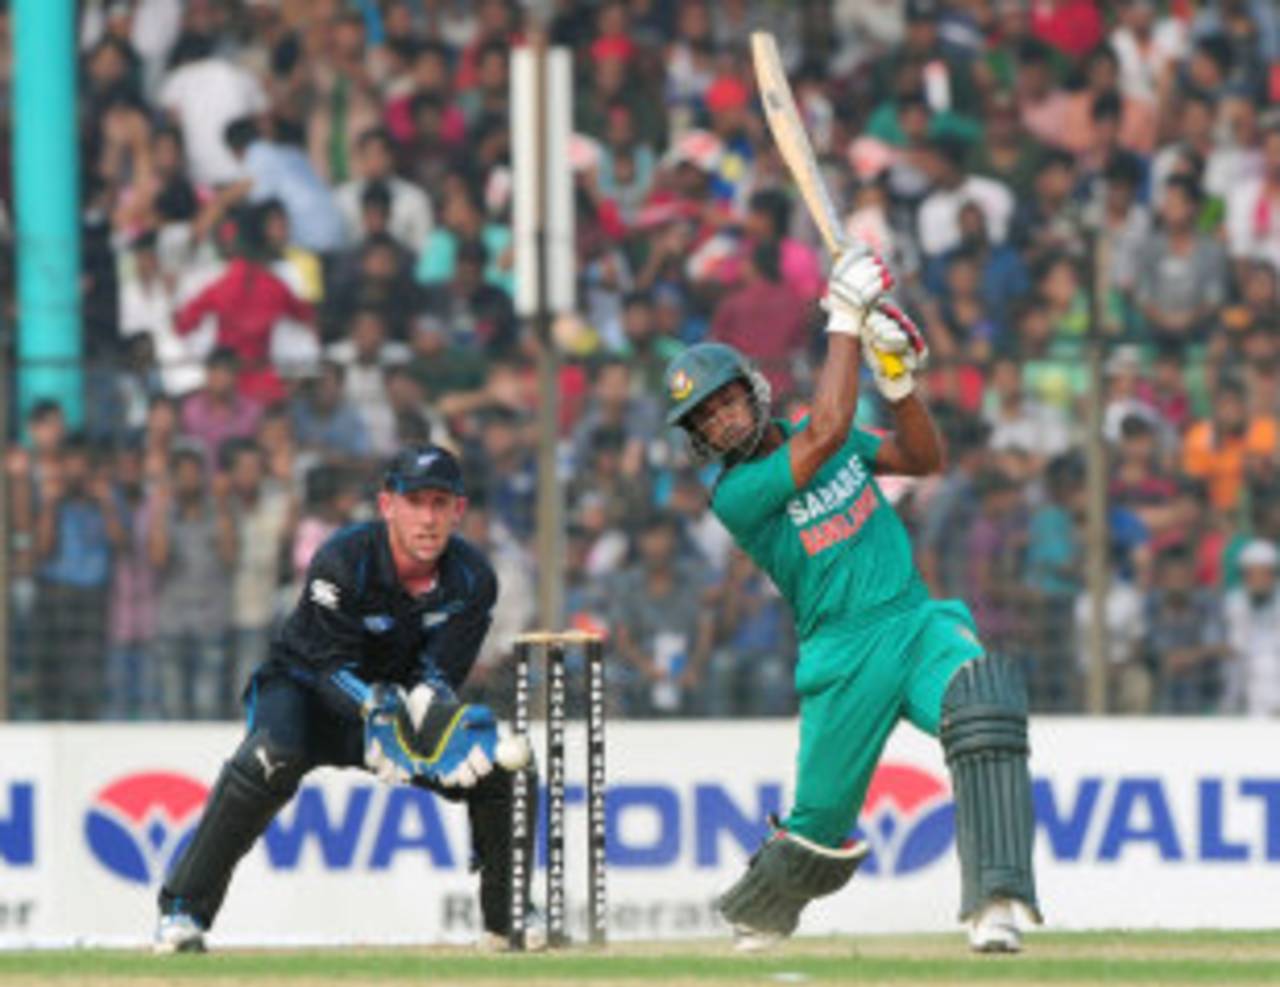 Naeem Islam's composed innings ensured Bangladesh's chase remained on track&nbsp;&nbsp;&bull;&nbsp;&nbsp;AFP